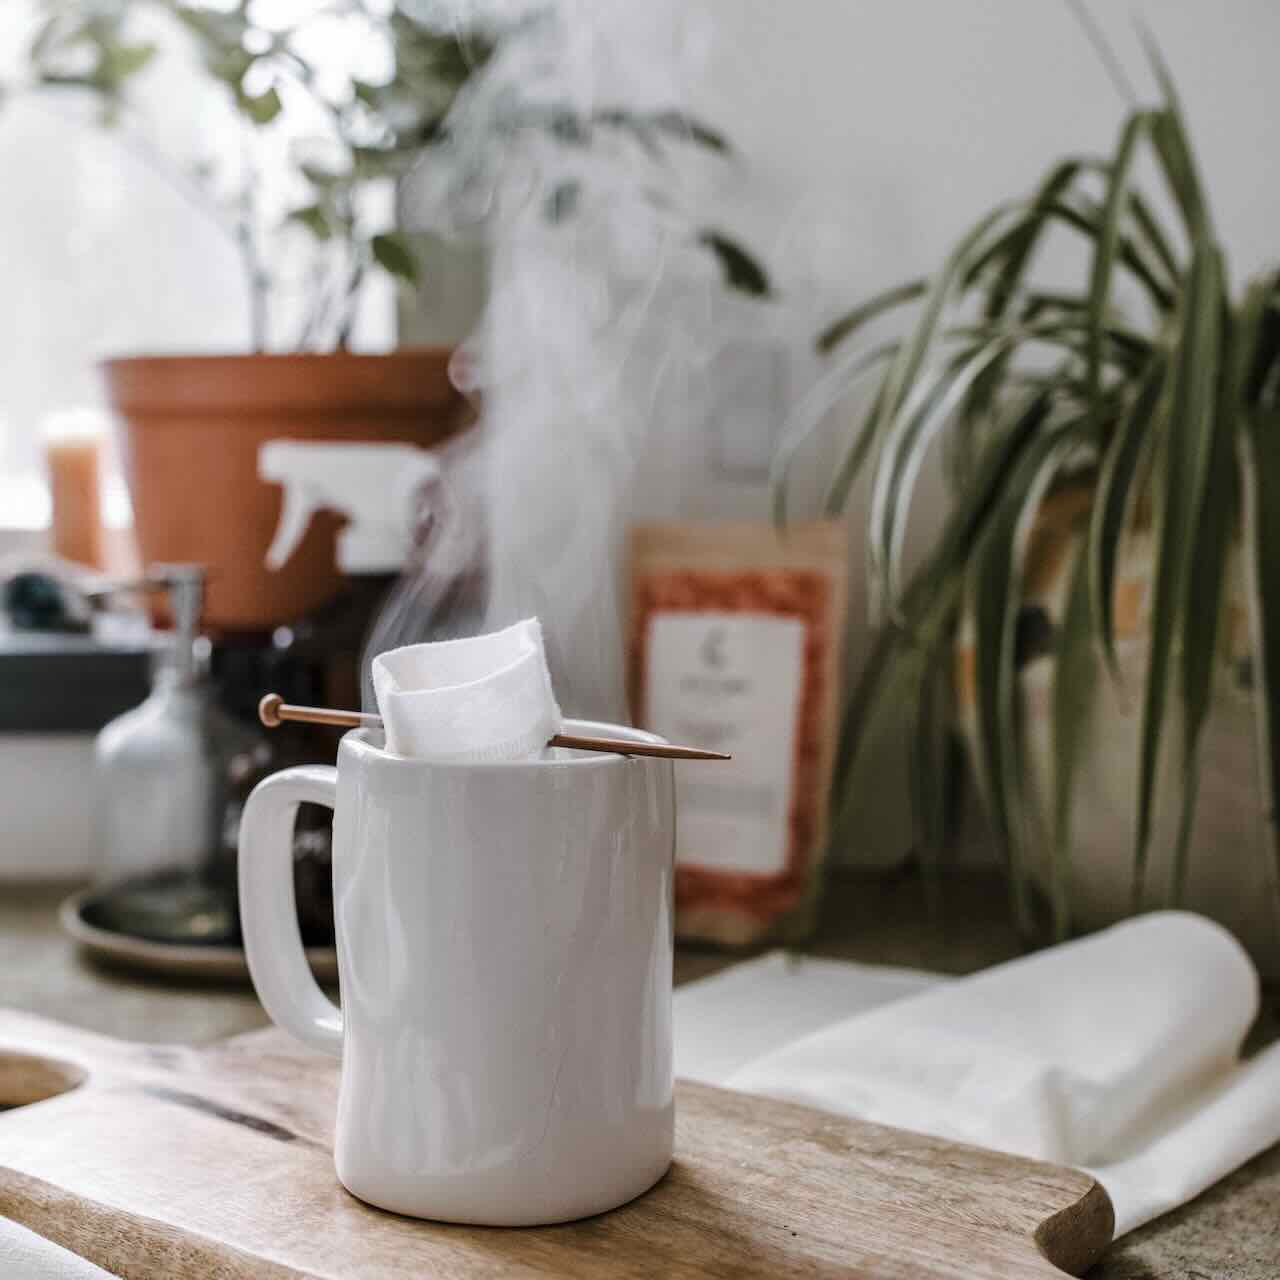 A reusable tea bag with balancing stick inside a white mug, brewing, as white smoke coming out of the mug.